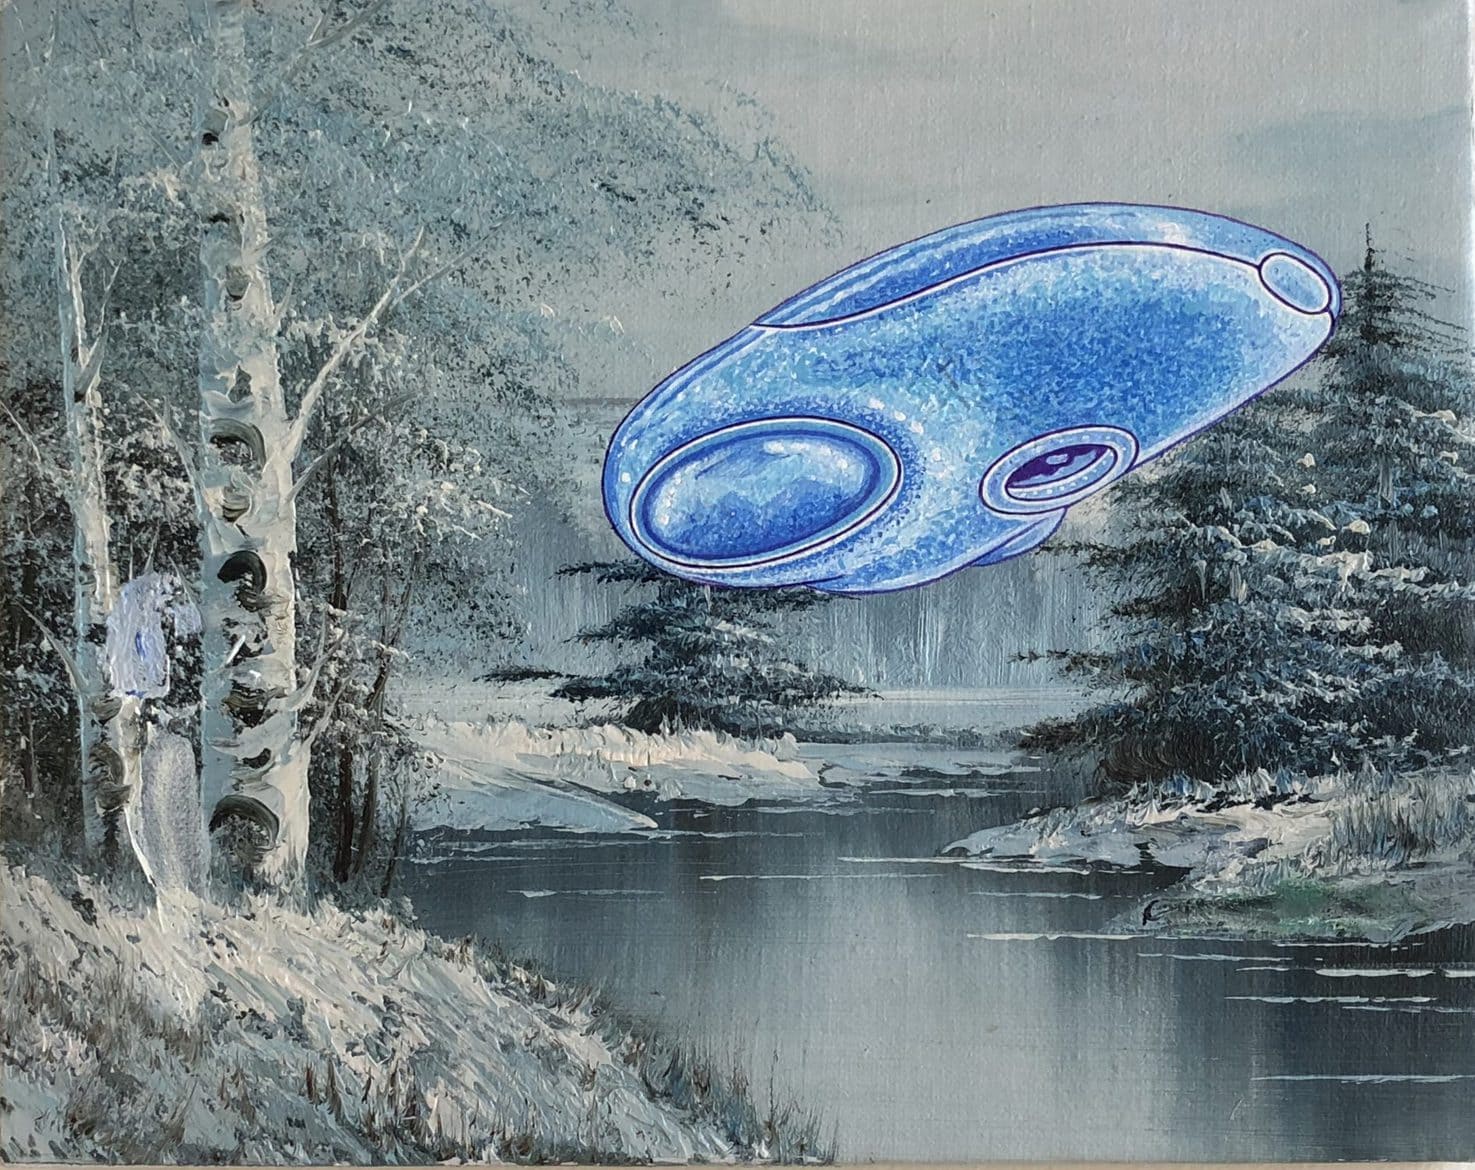 Tim Johnson and Daniel Bogunovic, 'eBay Blue Oyster Cult', 2019, acrylic on sourced canvas  painting, 20 x 25 cm